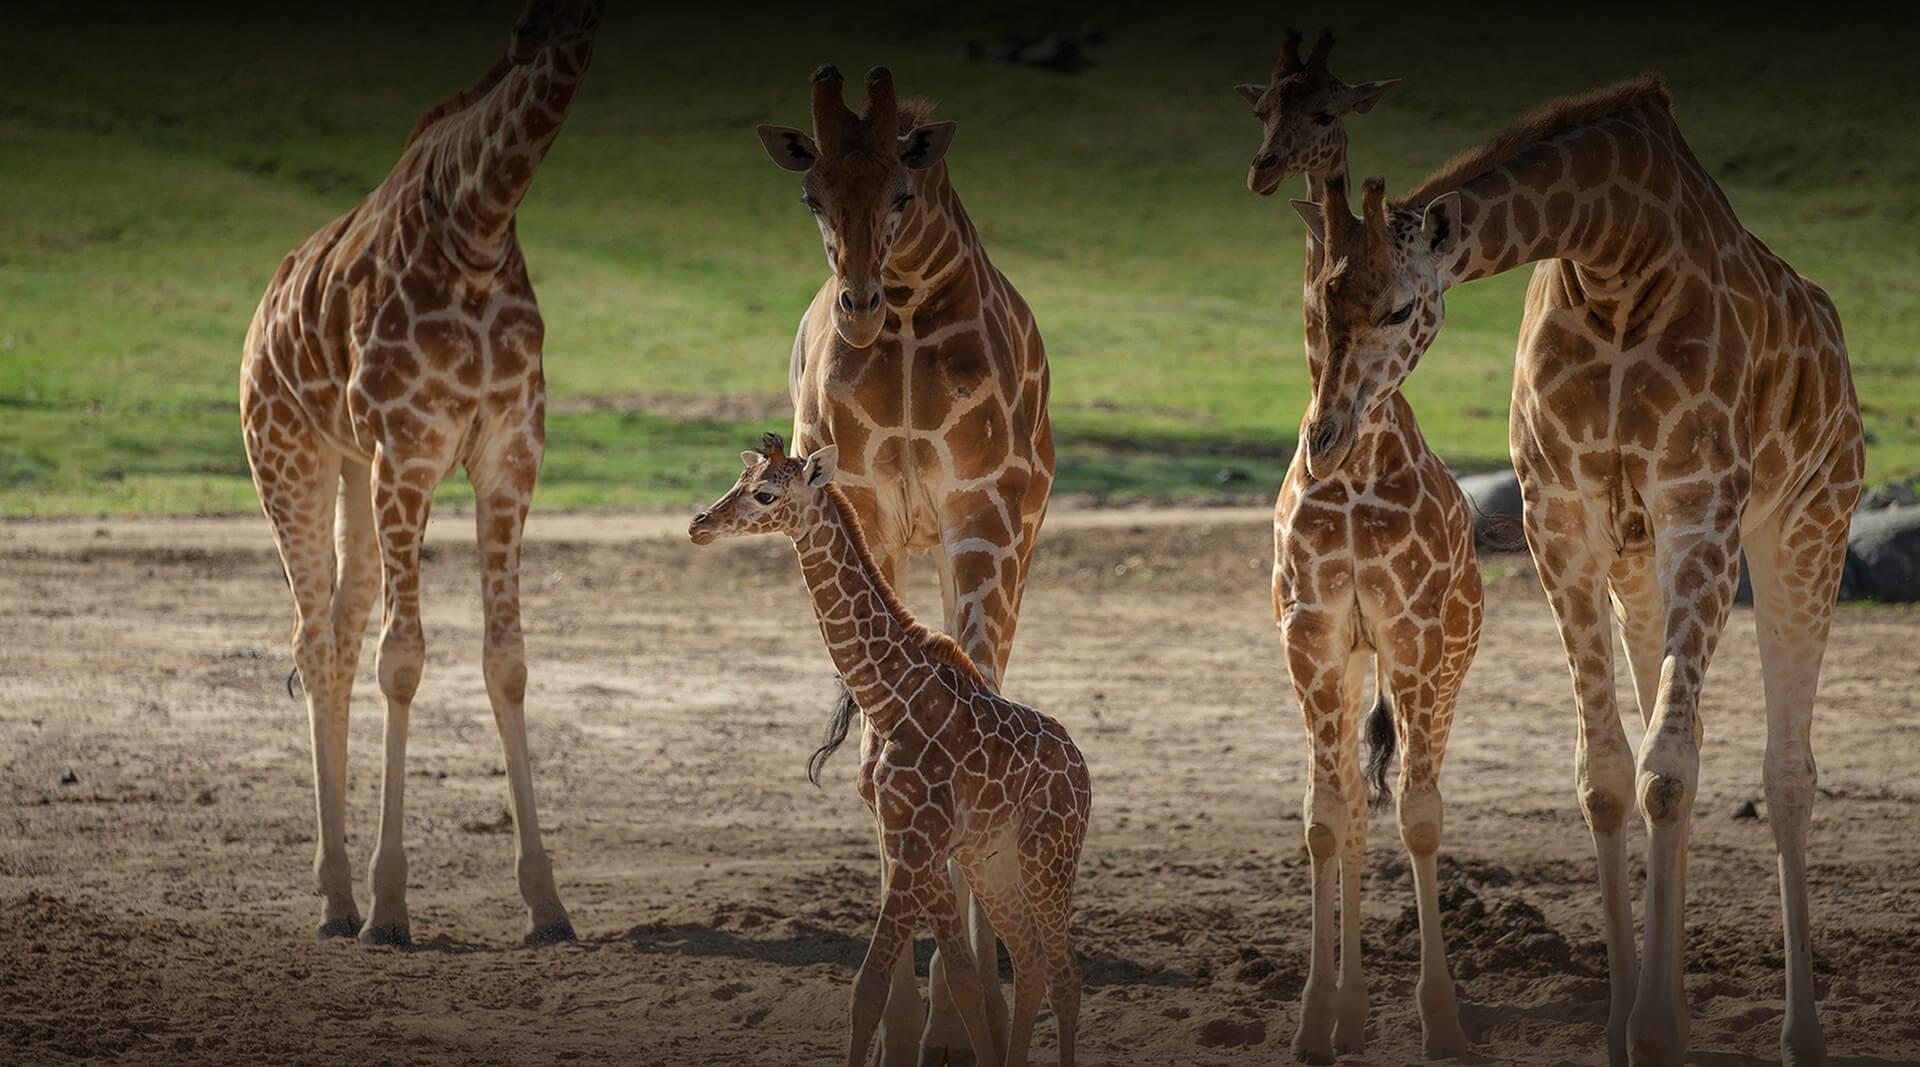 san diego zoo safari park webcam